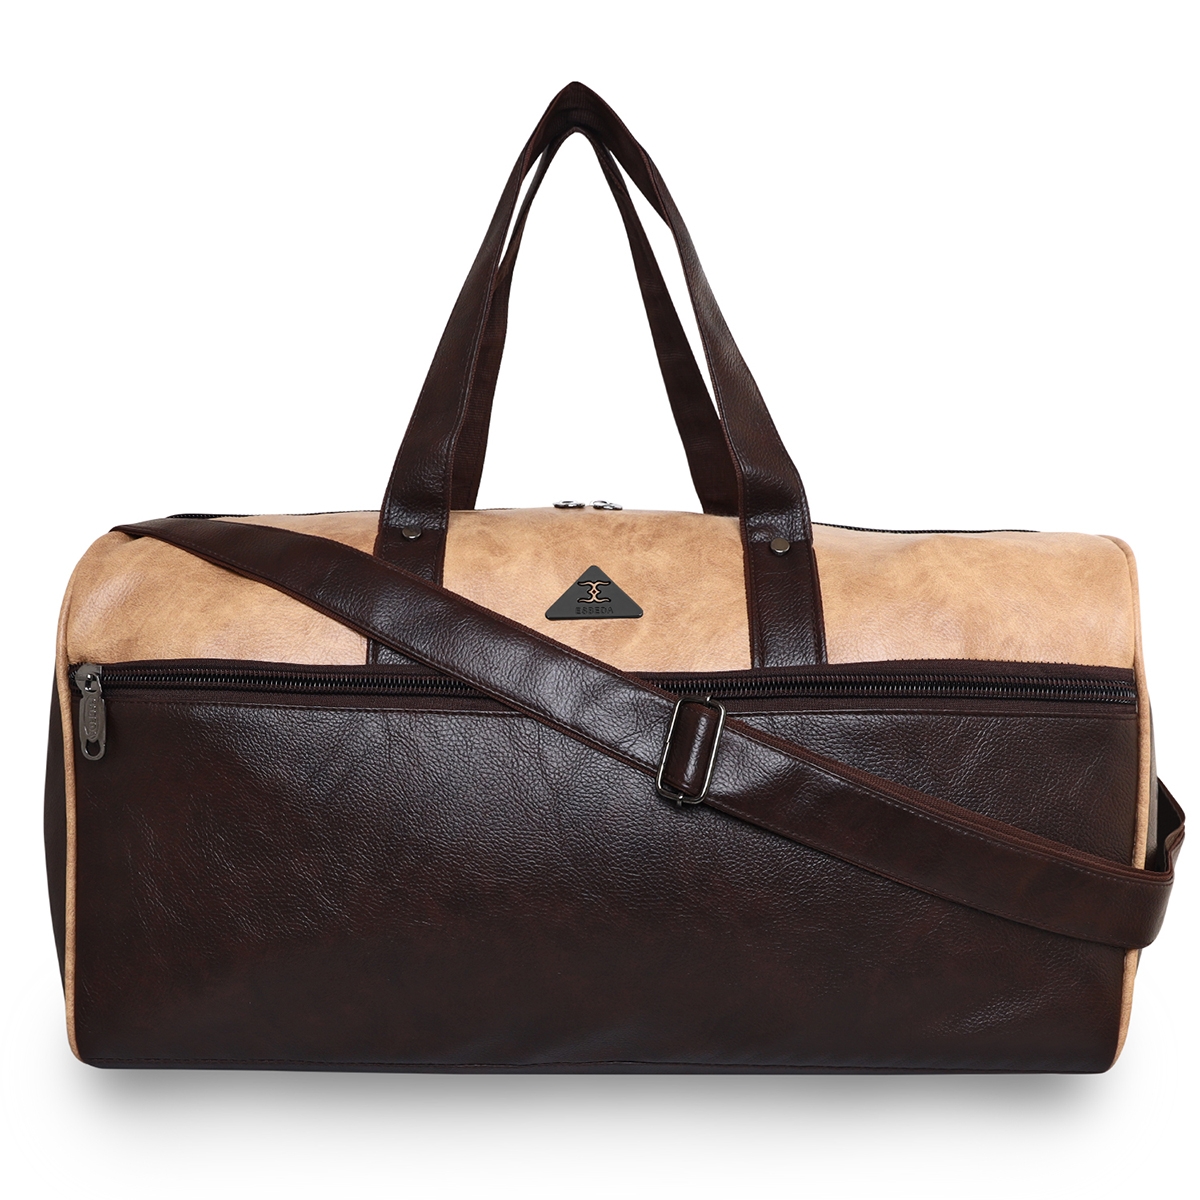 ESBEDA | ESBEDA Brown-Beige Color Travel Duffle Bag weekeder For Mens and Womens